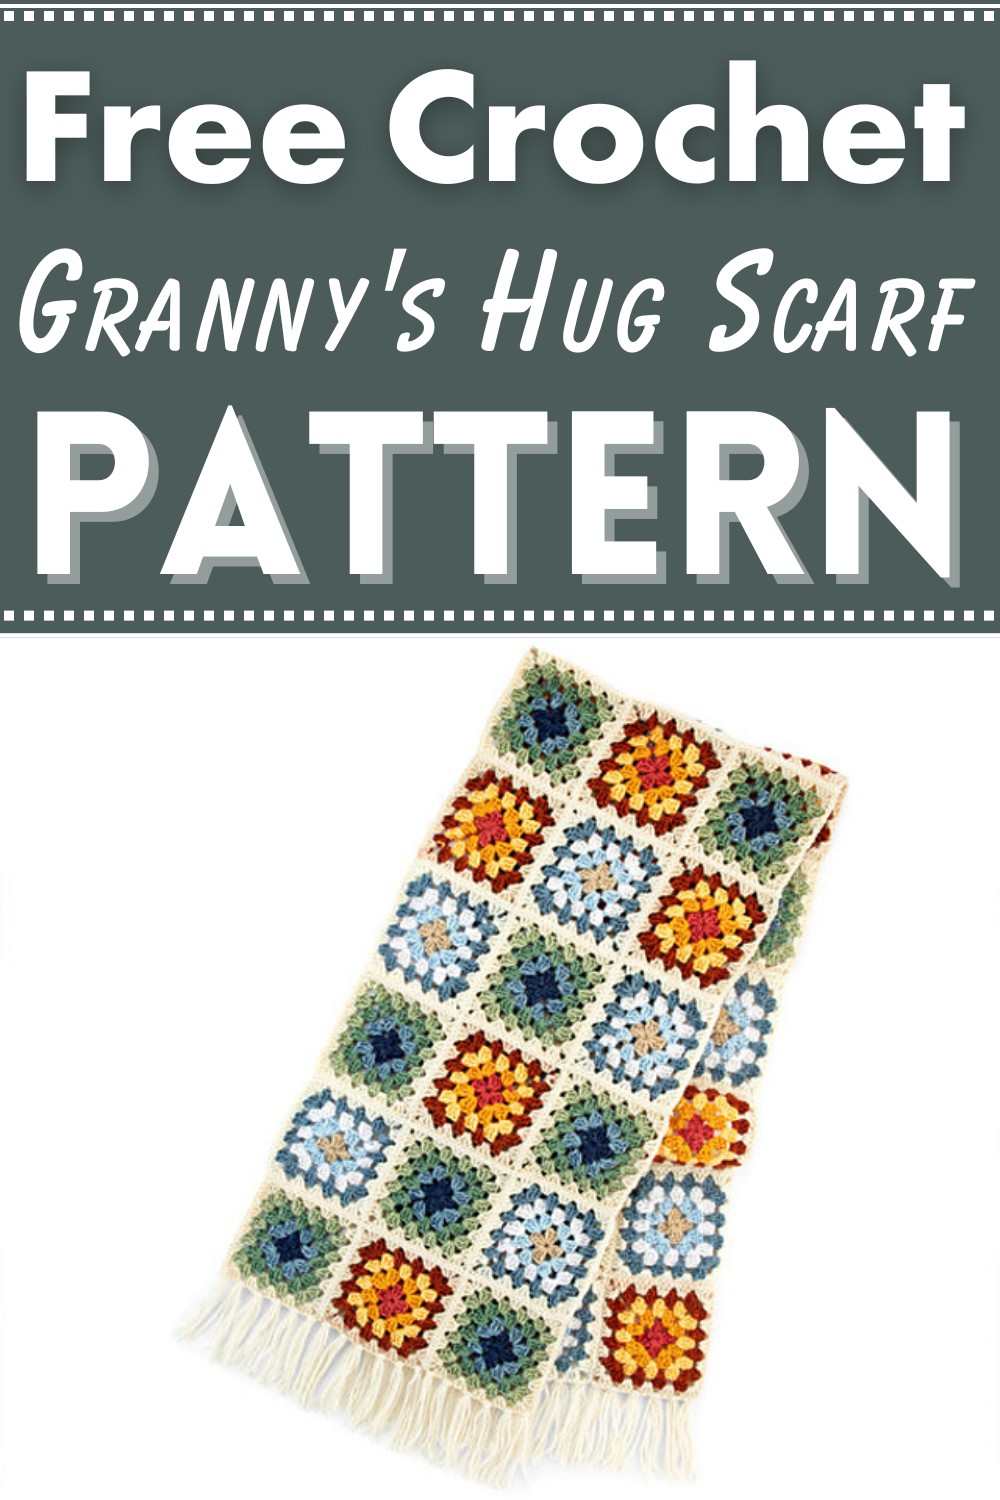 Granny's Hug Scarf